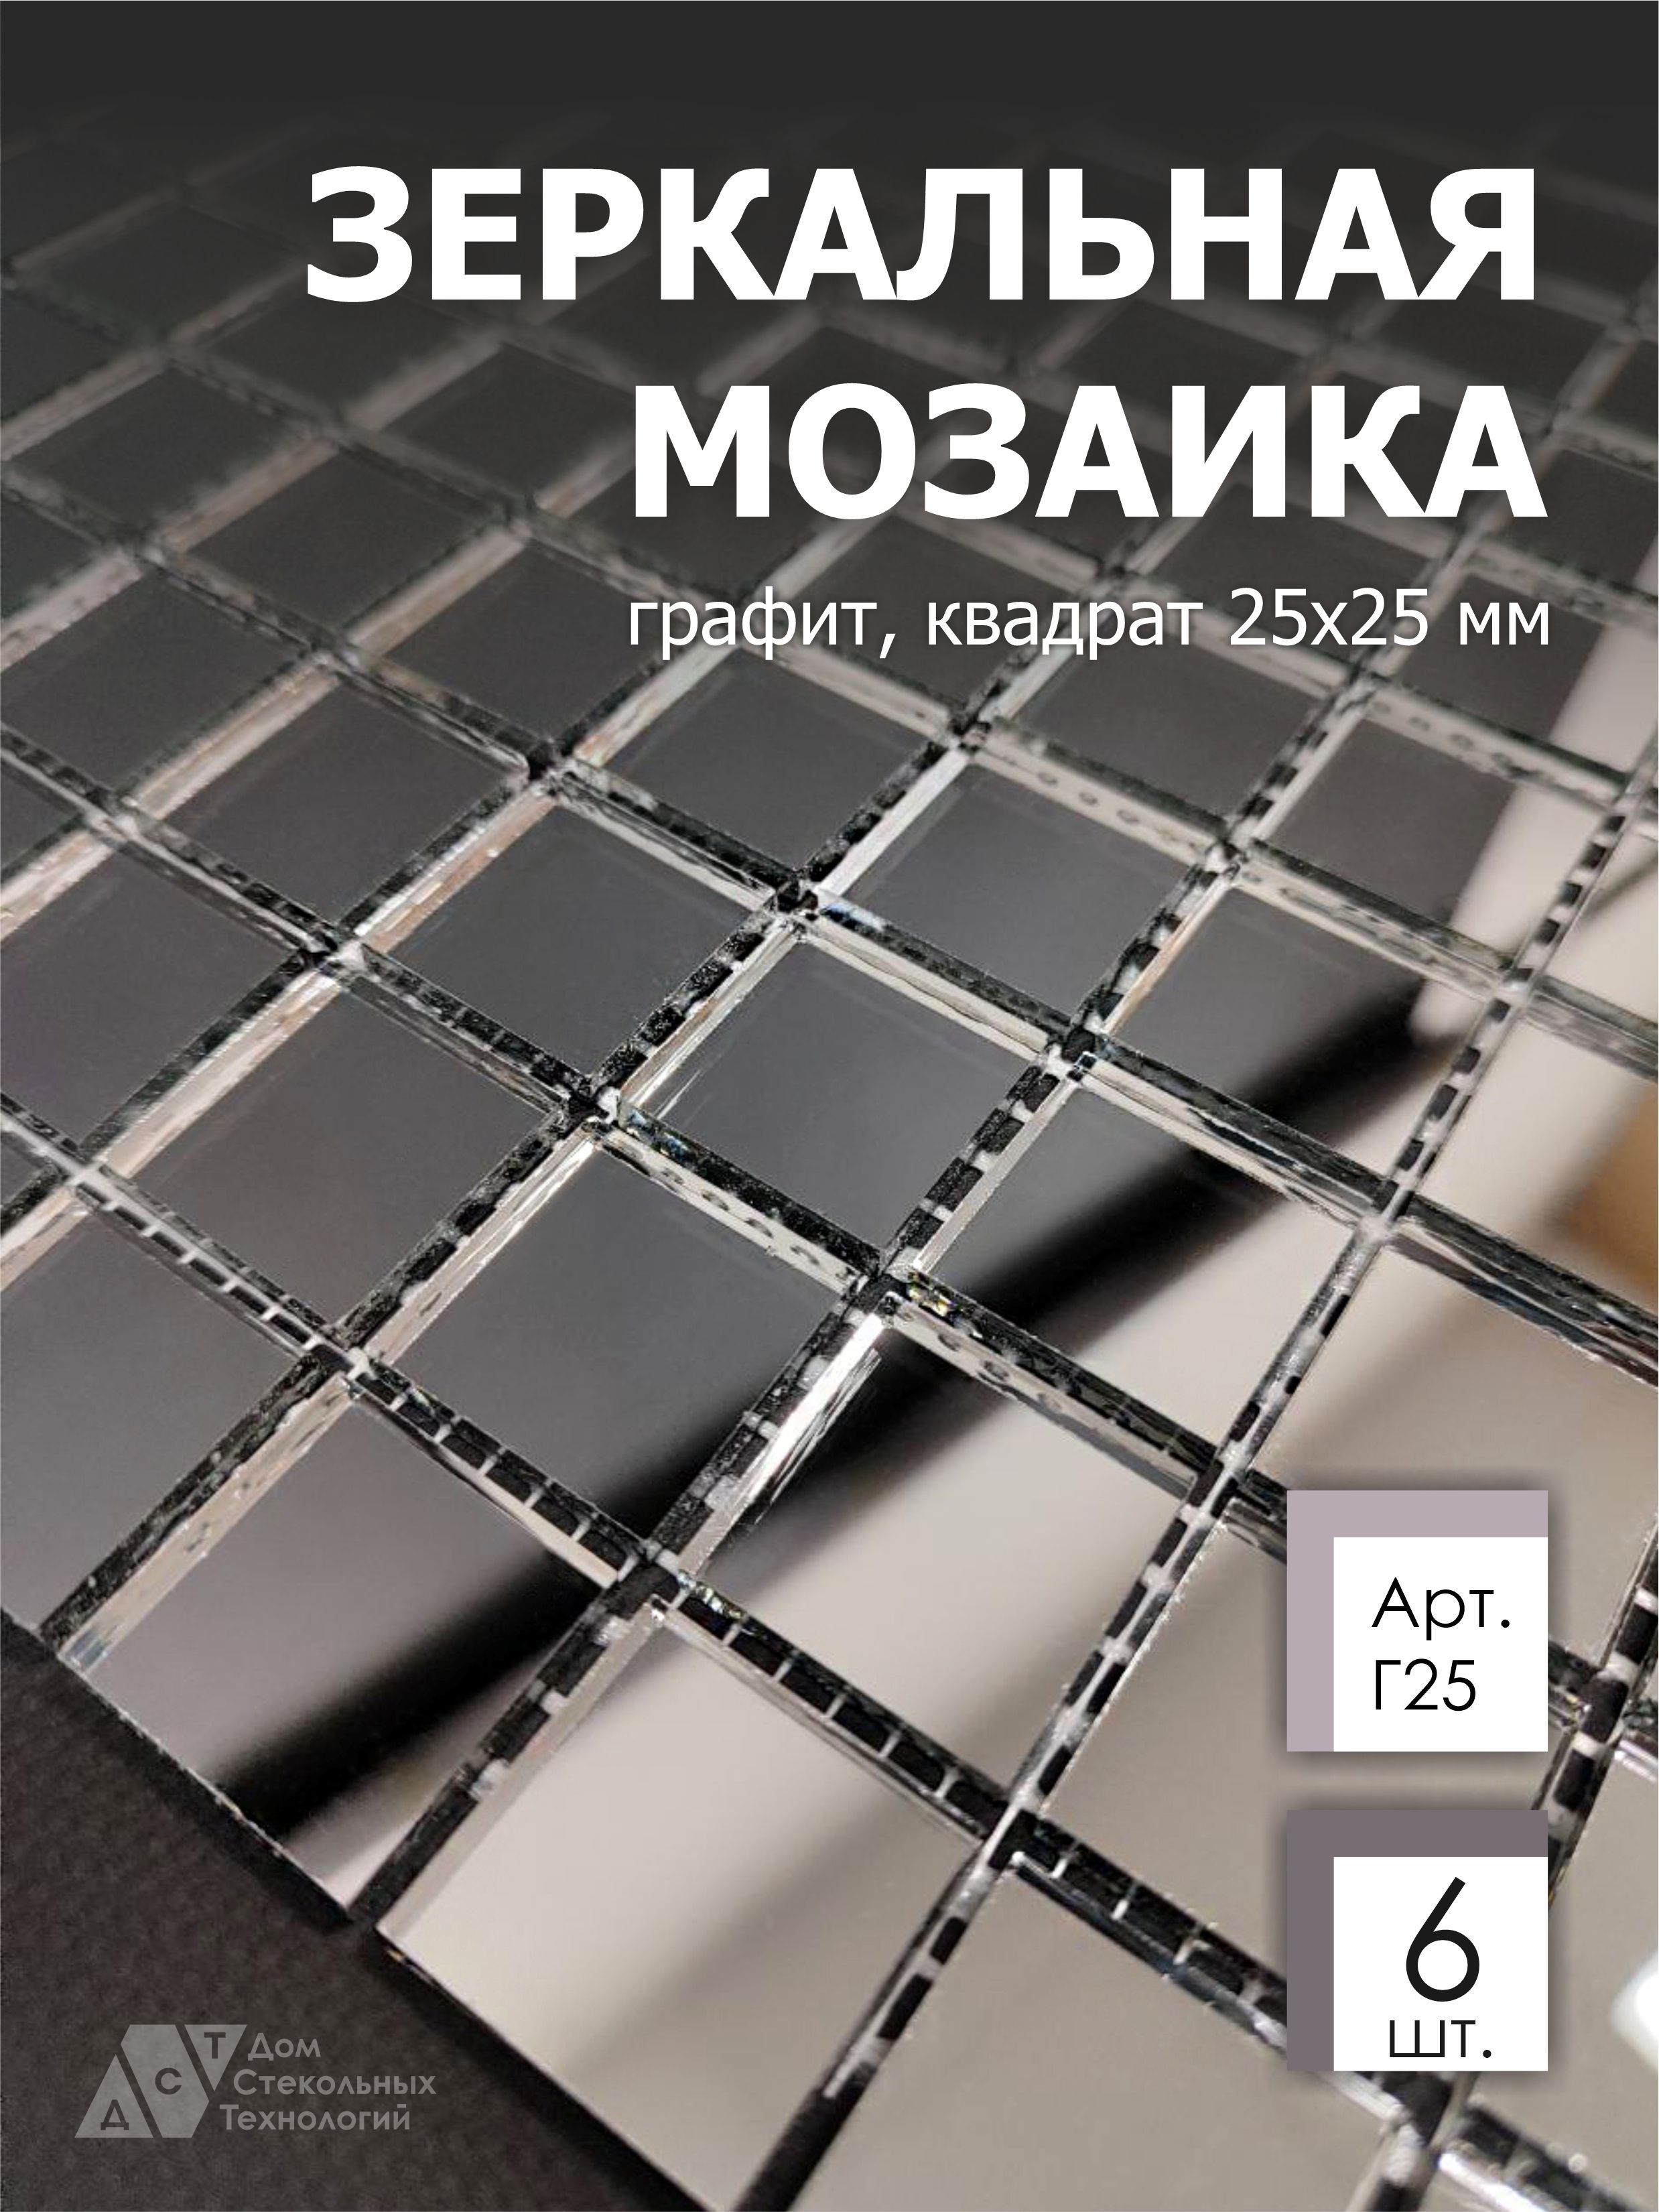 Зеркальная мозаика на сетке ДСТ Мозаика Г25 300х300мм графит 100%, с чипом 25*25мм, 6шт